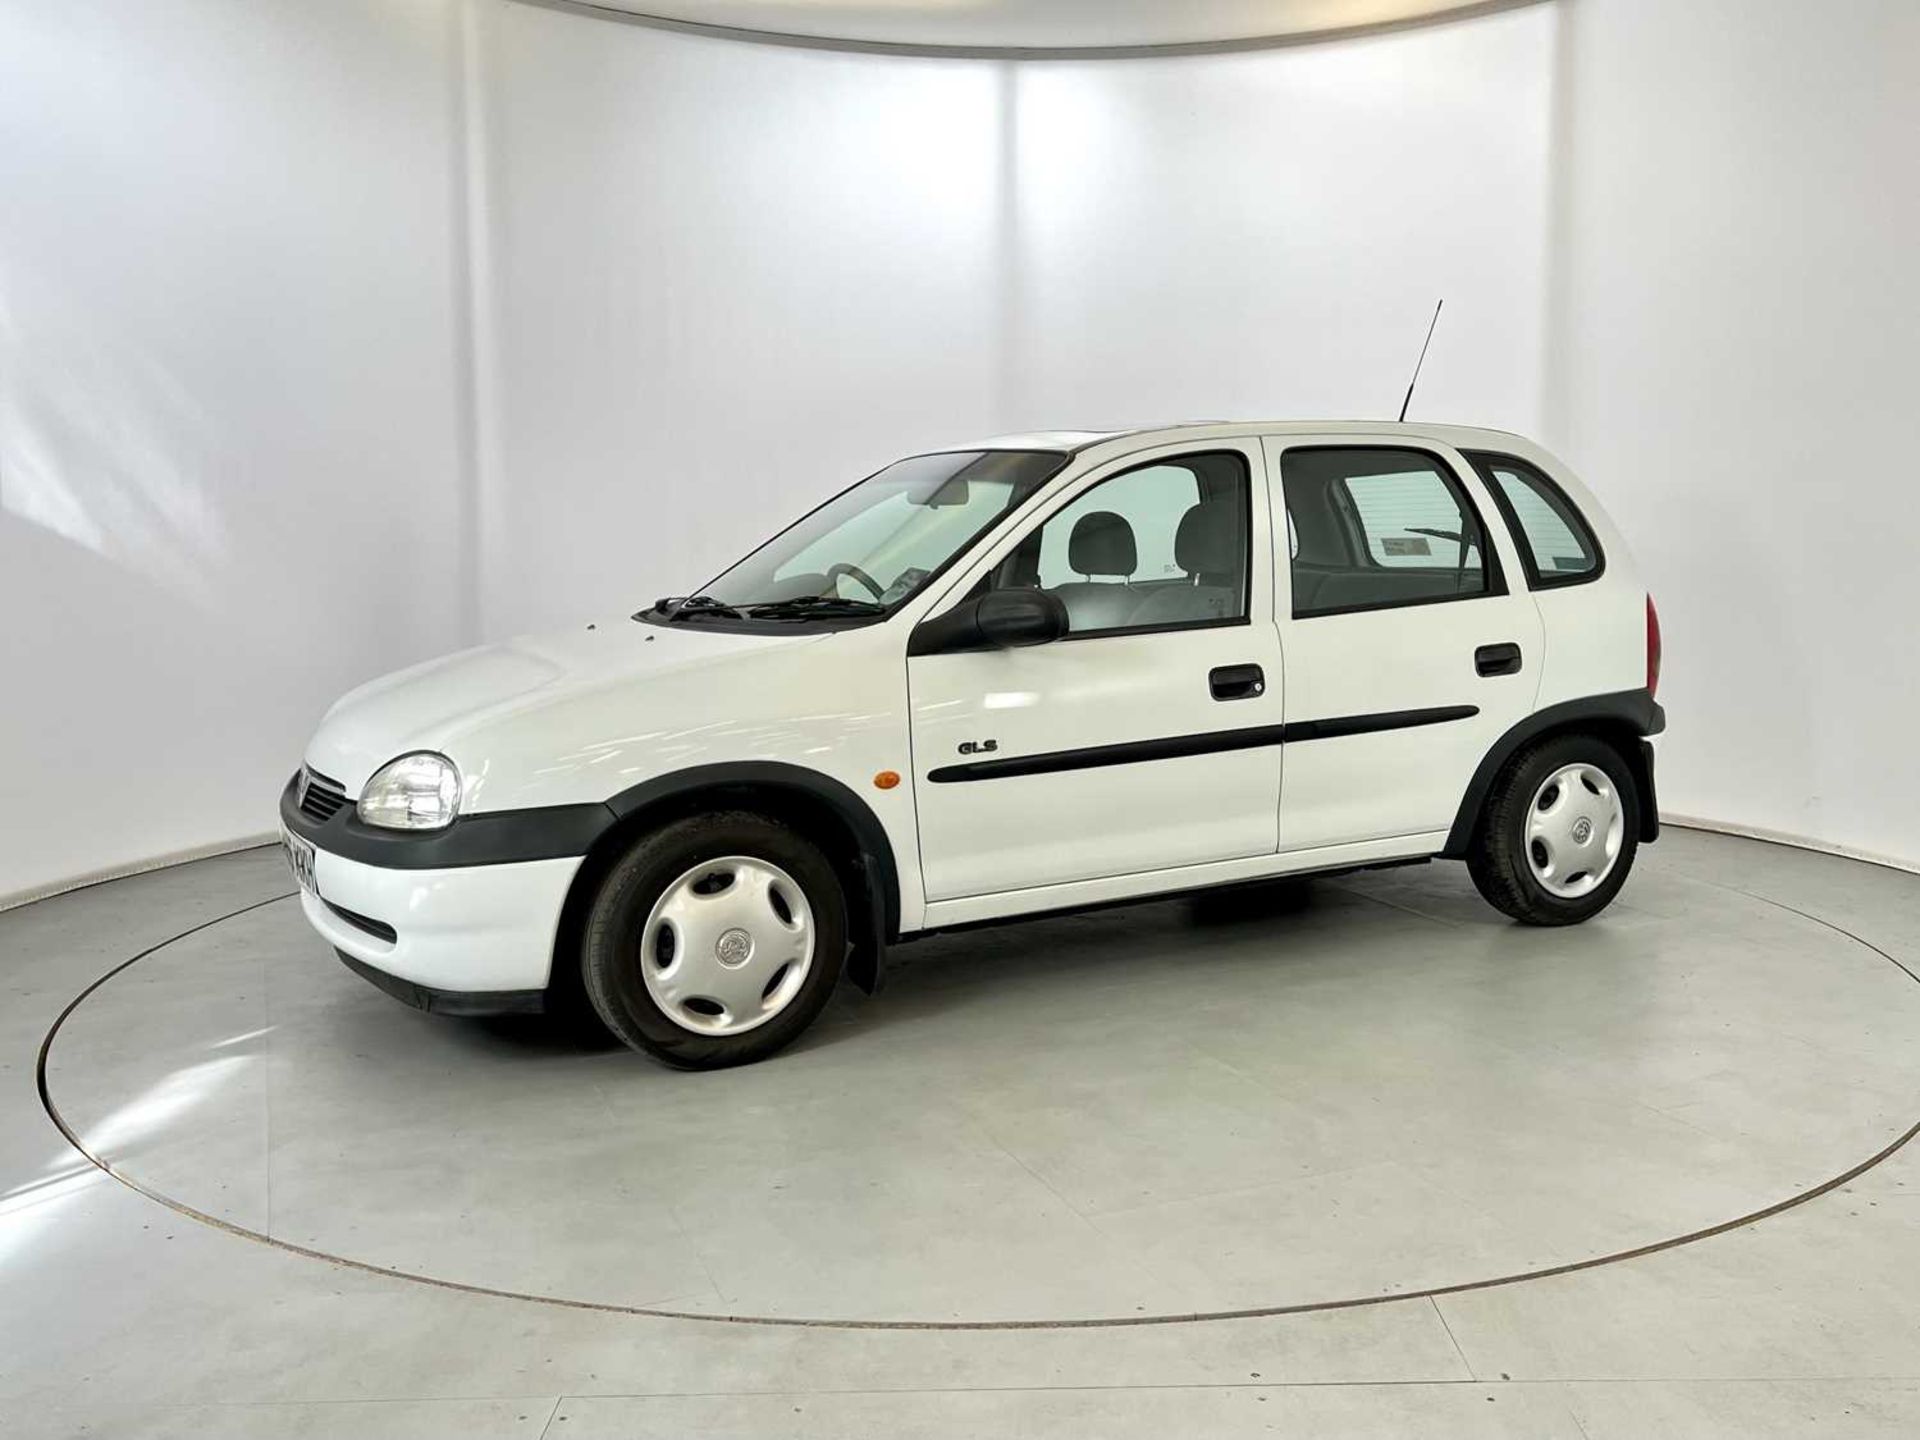 1997 Vauxhall Corsa - Image 4 of 34